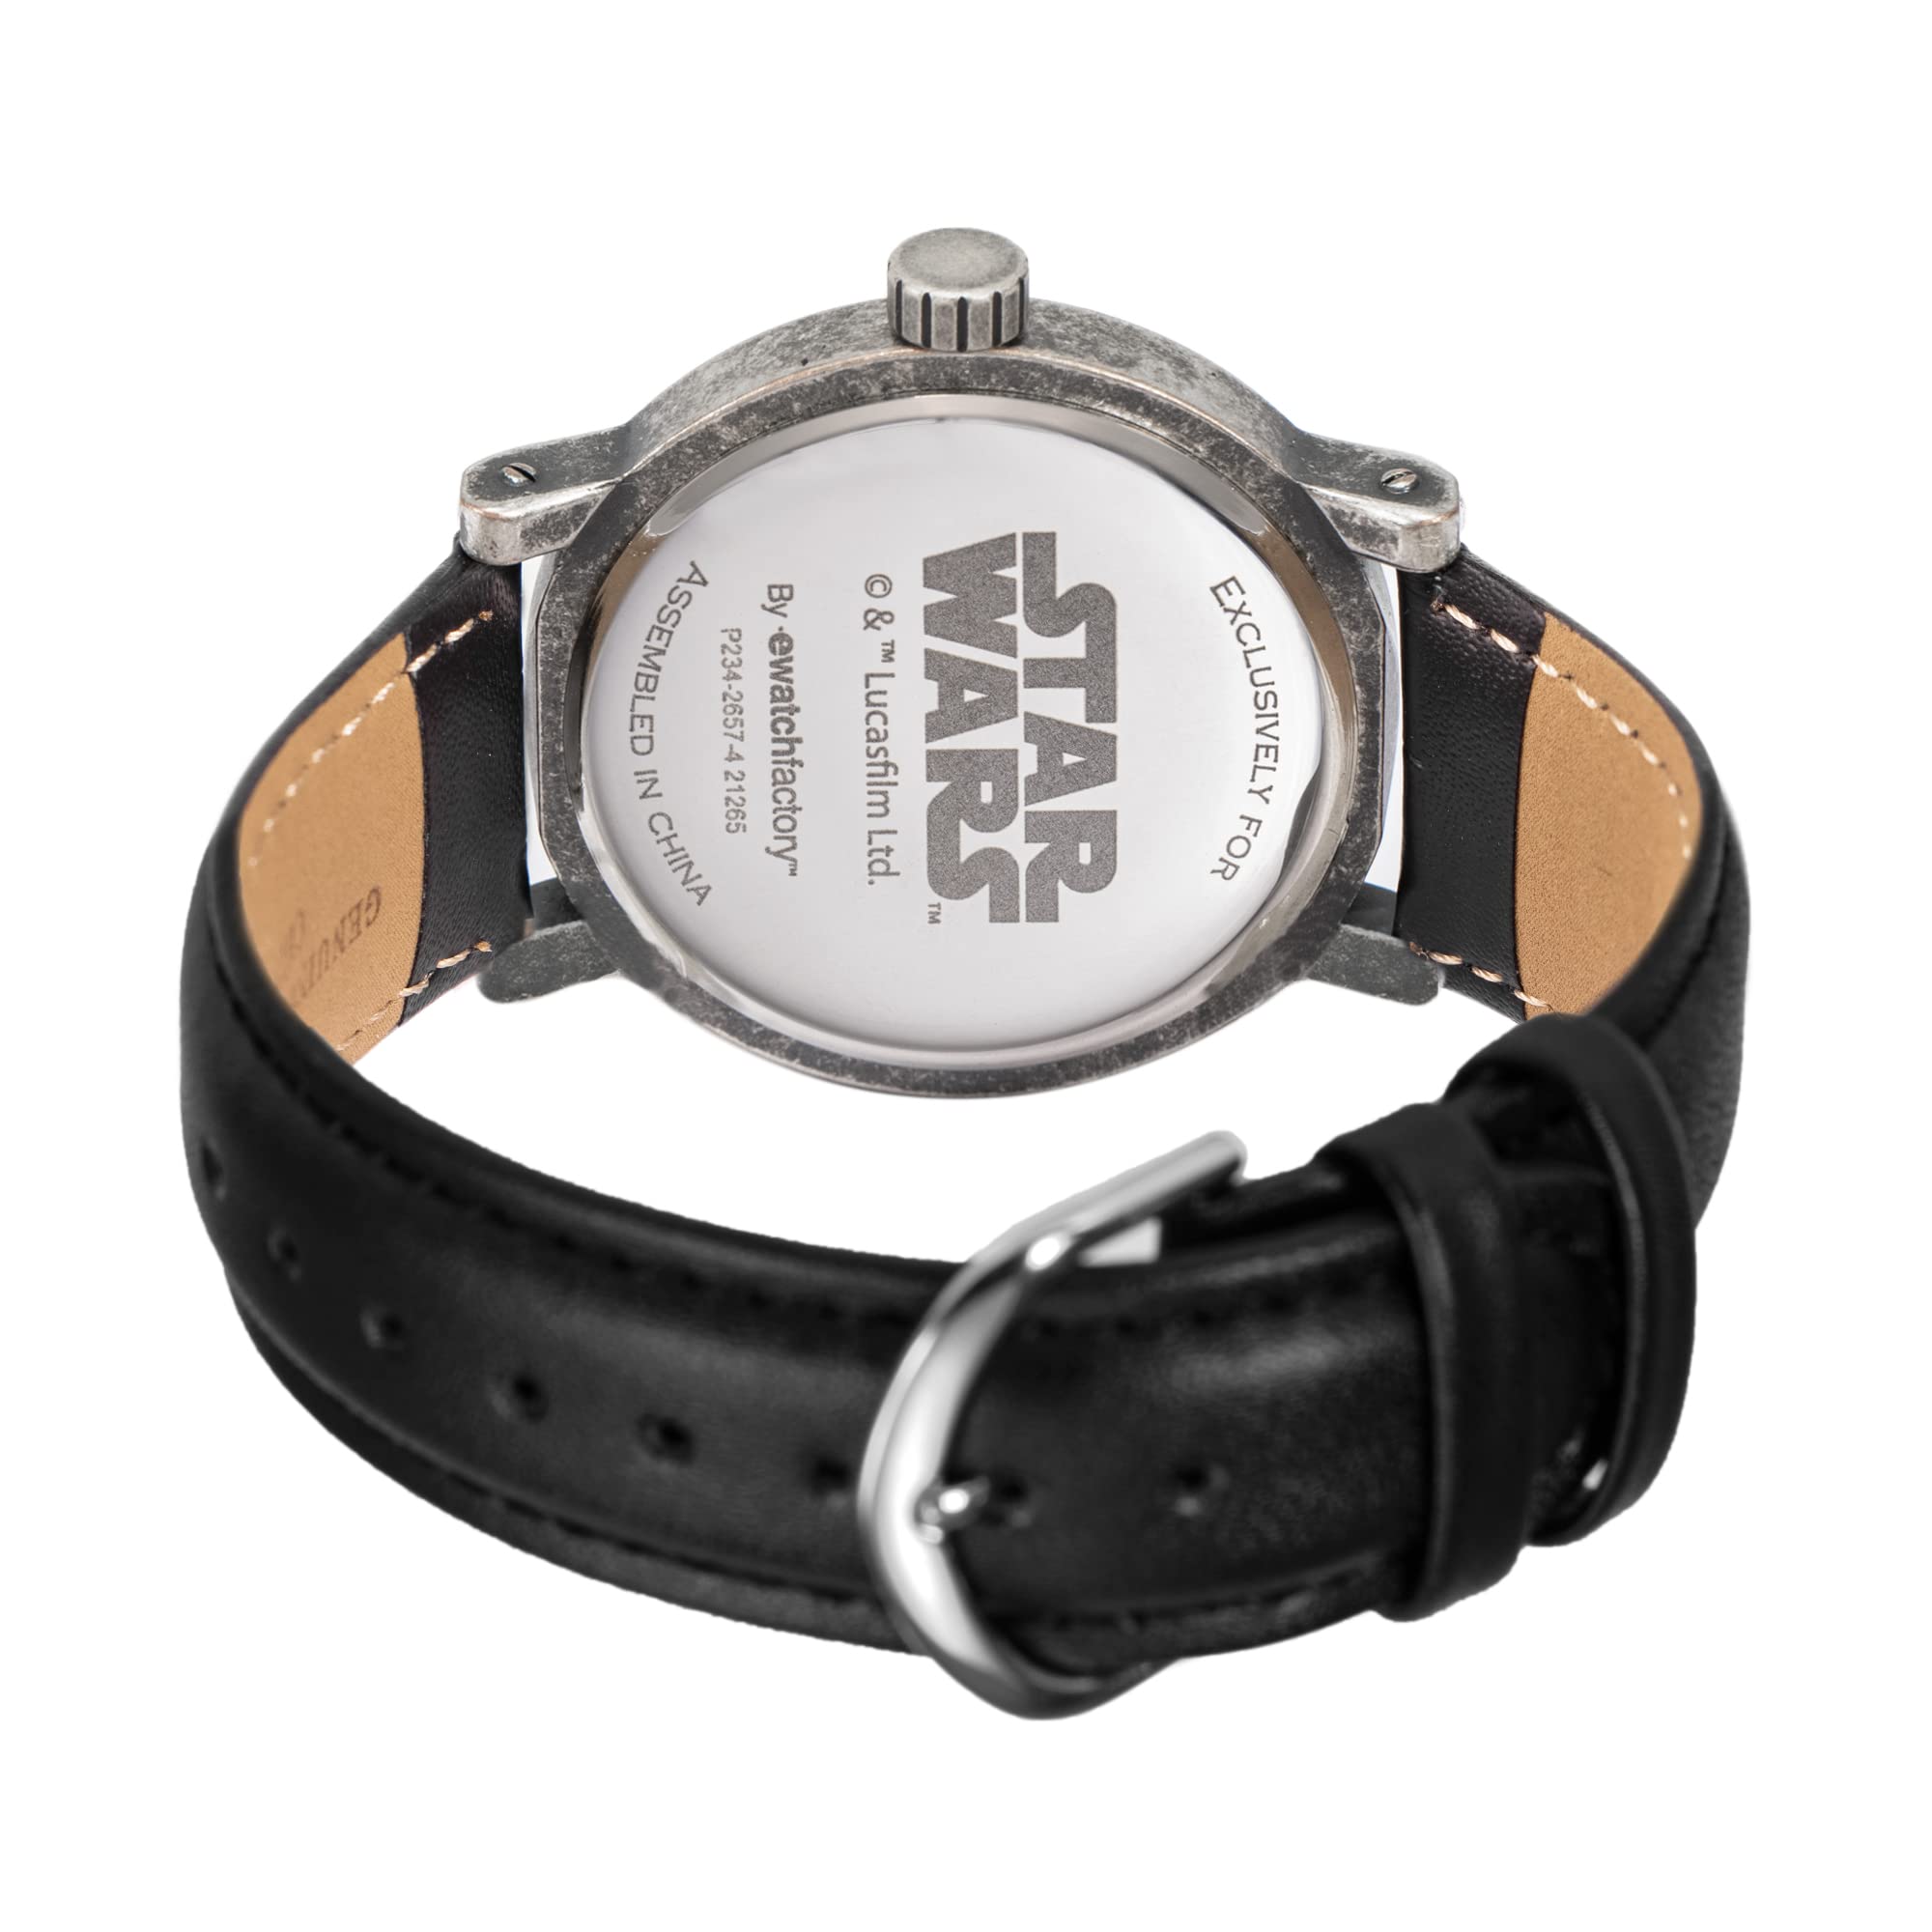 STAR WARS Adult Vintage Analog Quartz Watch